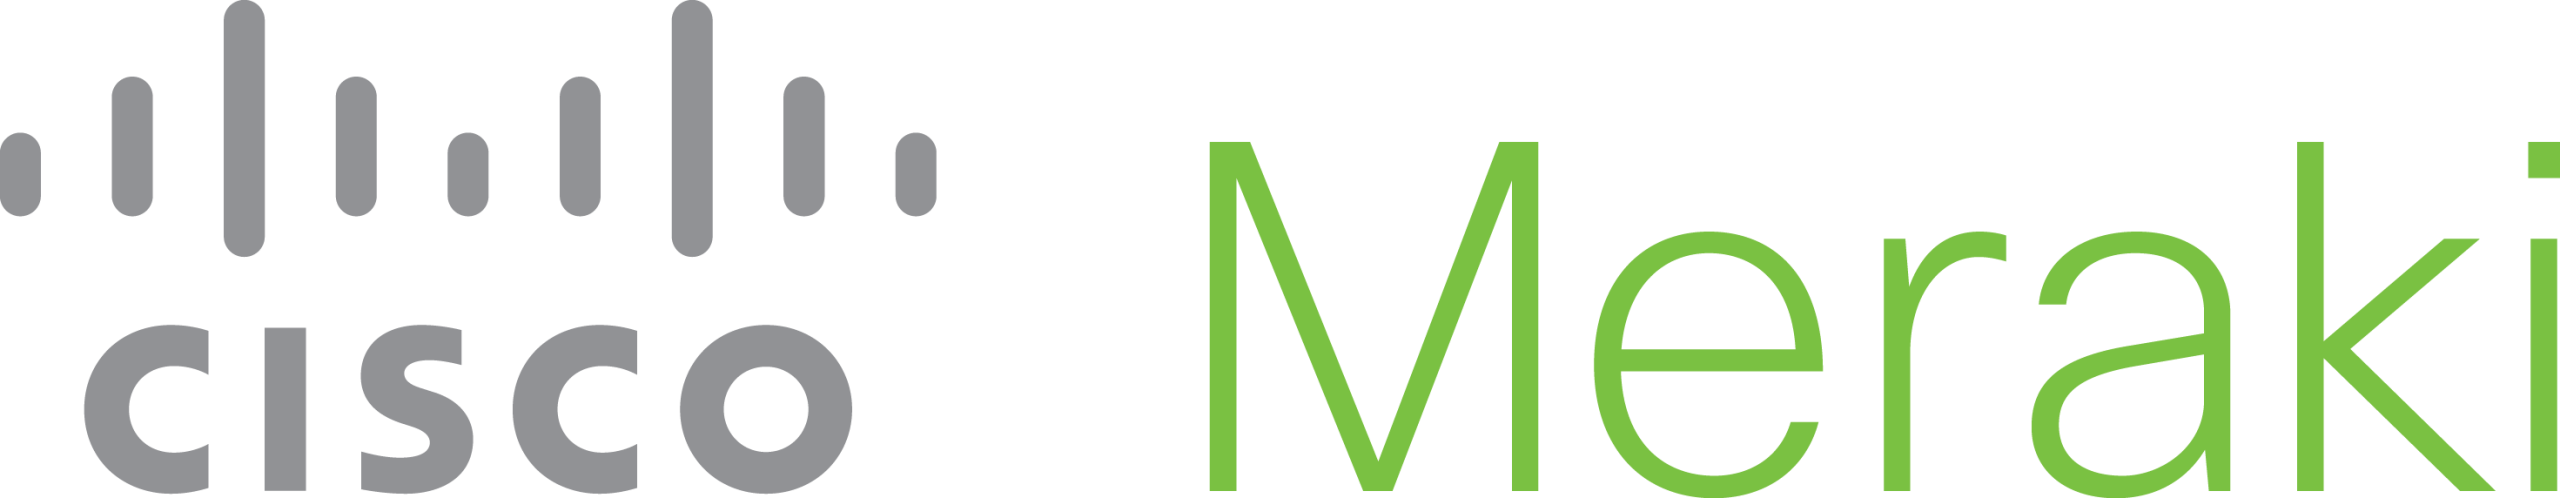 Cisco Meraki Trial Logo